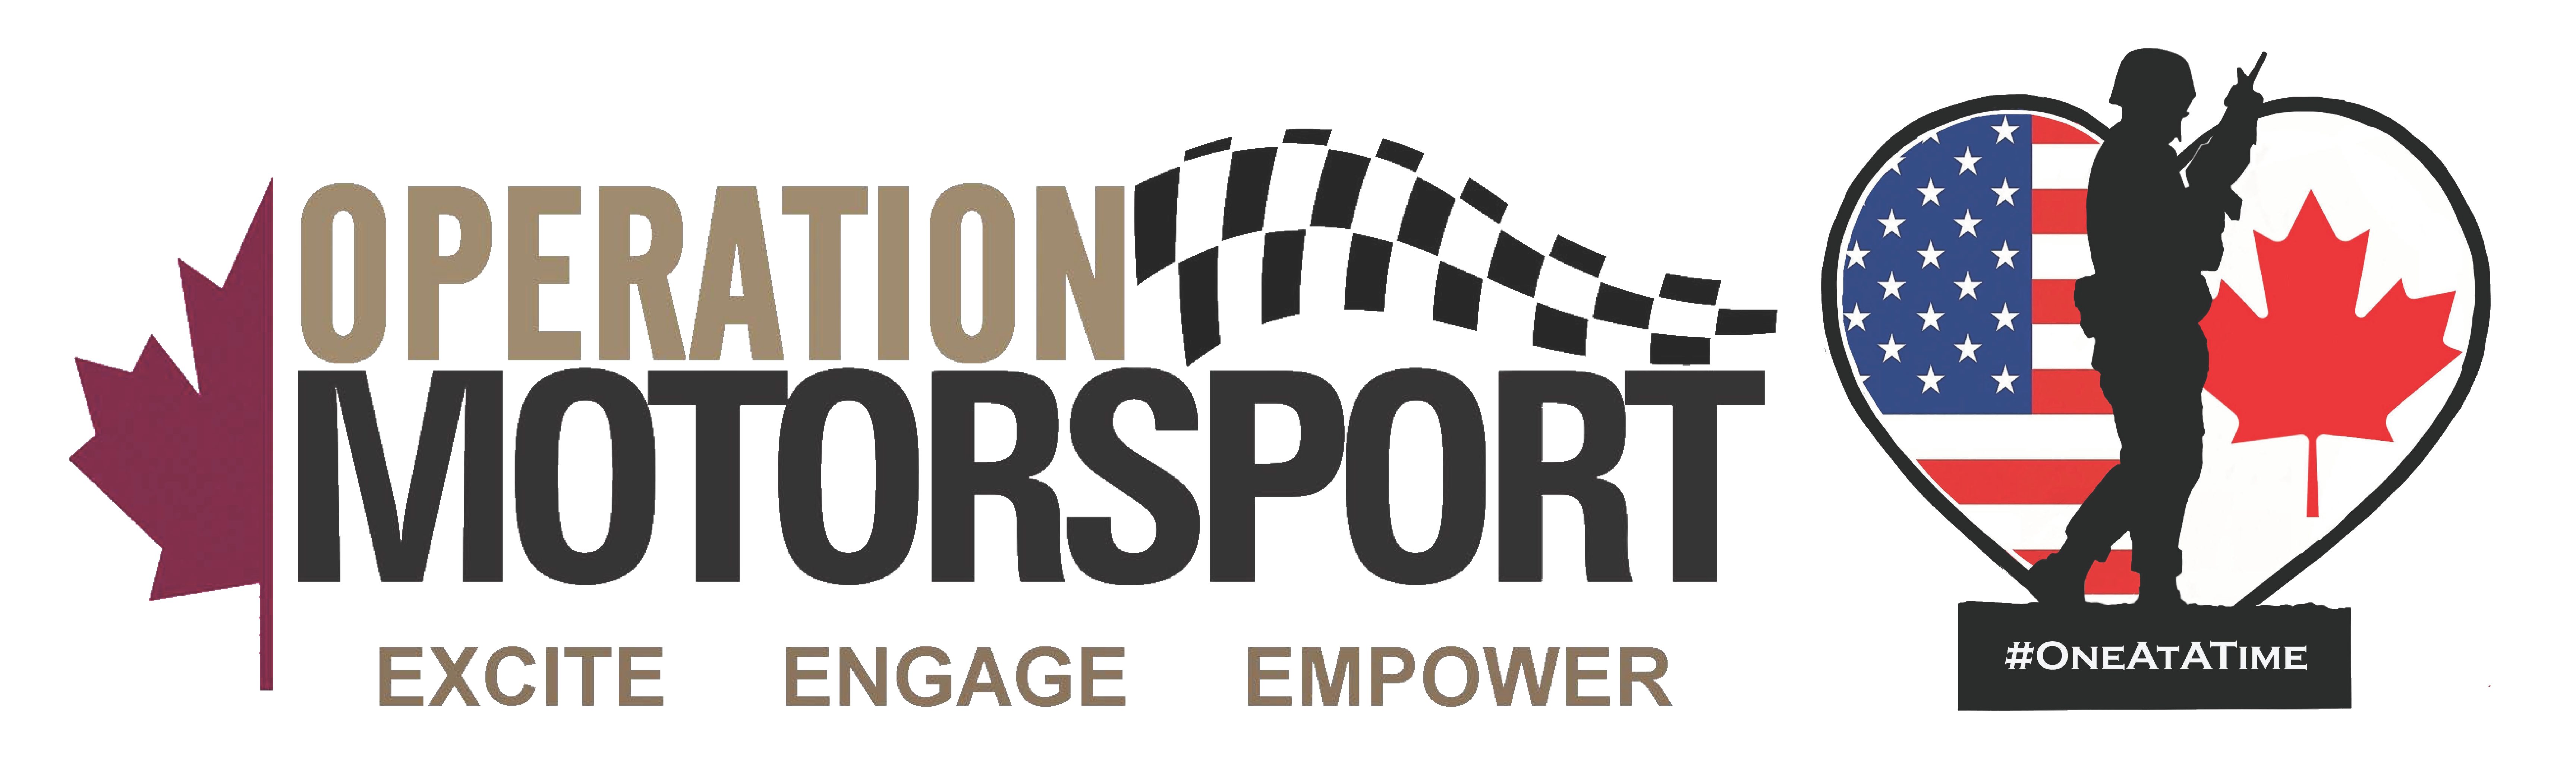 FEL Motorsports Announces Official Endorsement of Veteran Run Non-Profit Organization, Operation Motorsport.